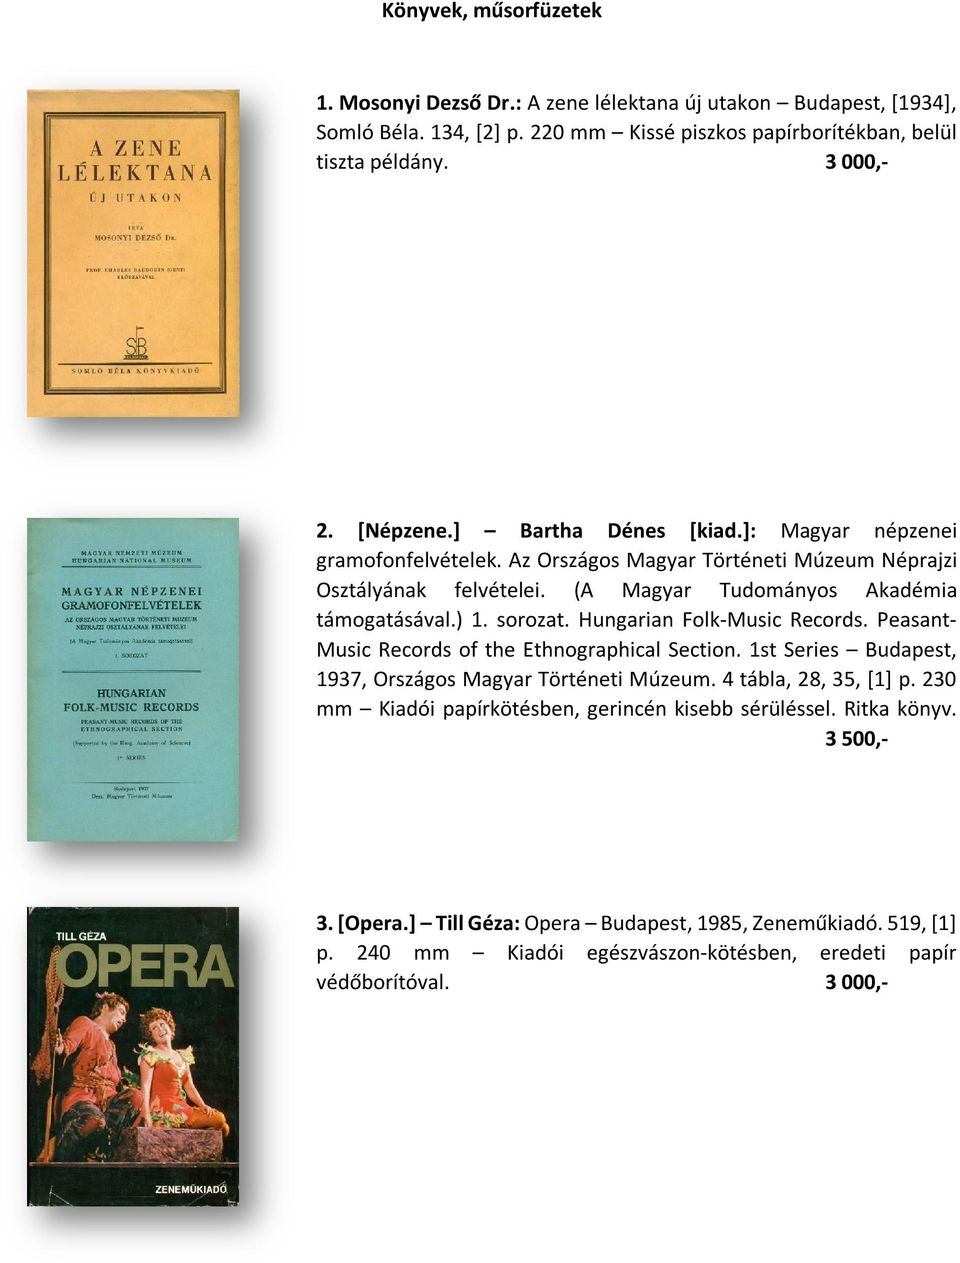 Hungarian Folk-Music Records. Peasant- Music Records of the Ethnographical Section. 1st Series Budapest, 1937, Országos Magyar Történeti Múzeum. 4 tábla, 28, 35, [1] p.